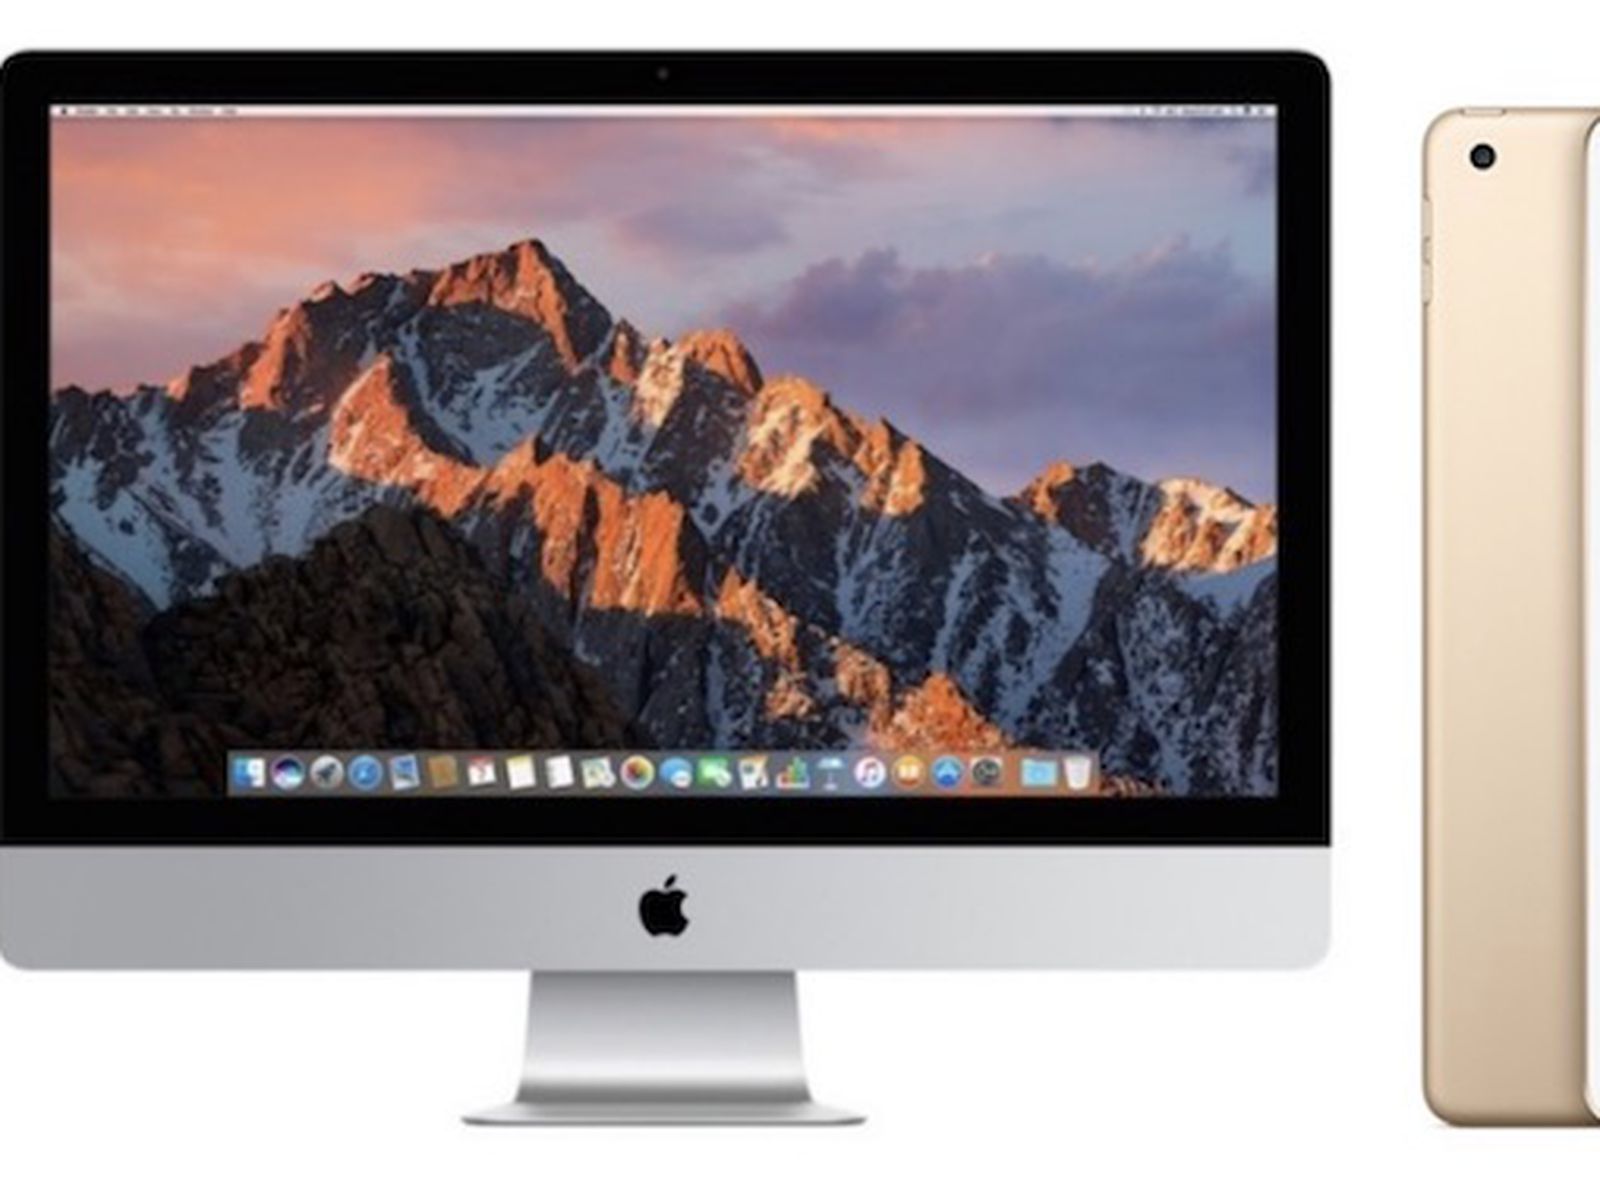 MacMall Begins Black Friday on iMac, Mac mini, iPad, and More - MacRumors